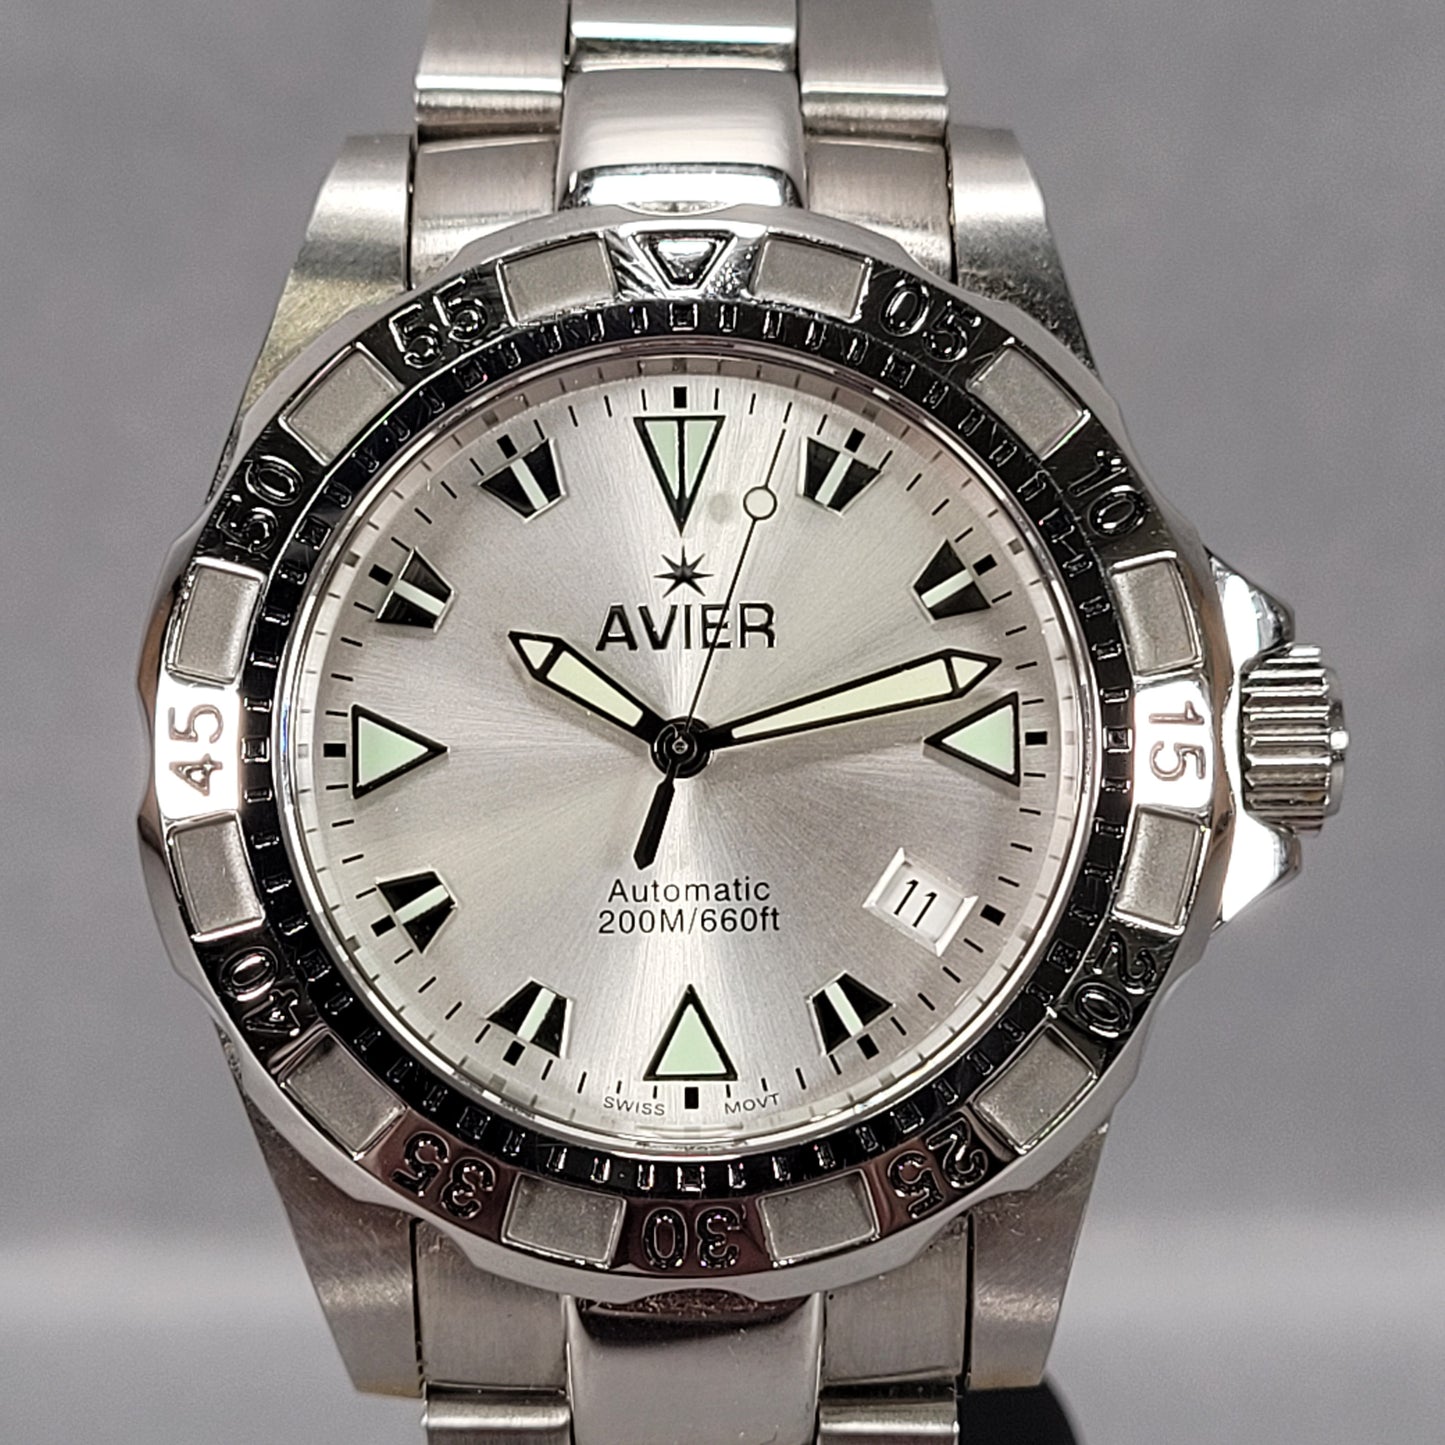 Avier Triton ETA 2824-2 Automatic Men's Watch